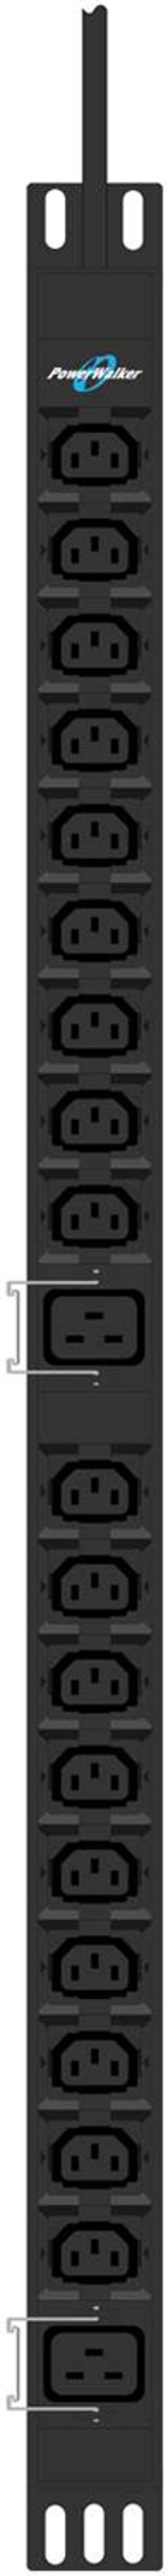 Powerwalker PowerWalker 10133024 tehonjakeluyksikkö 20 AC-pistorasia(a) 0U Musta